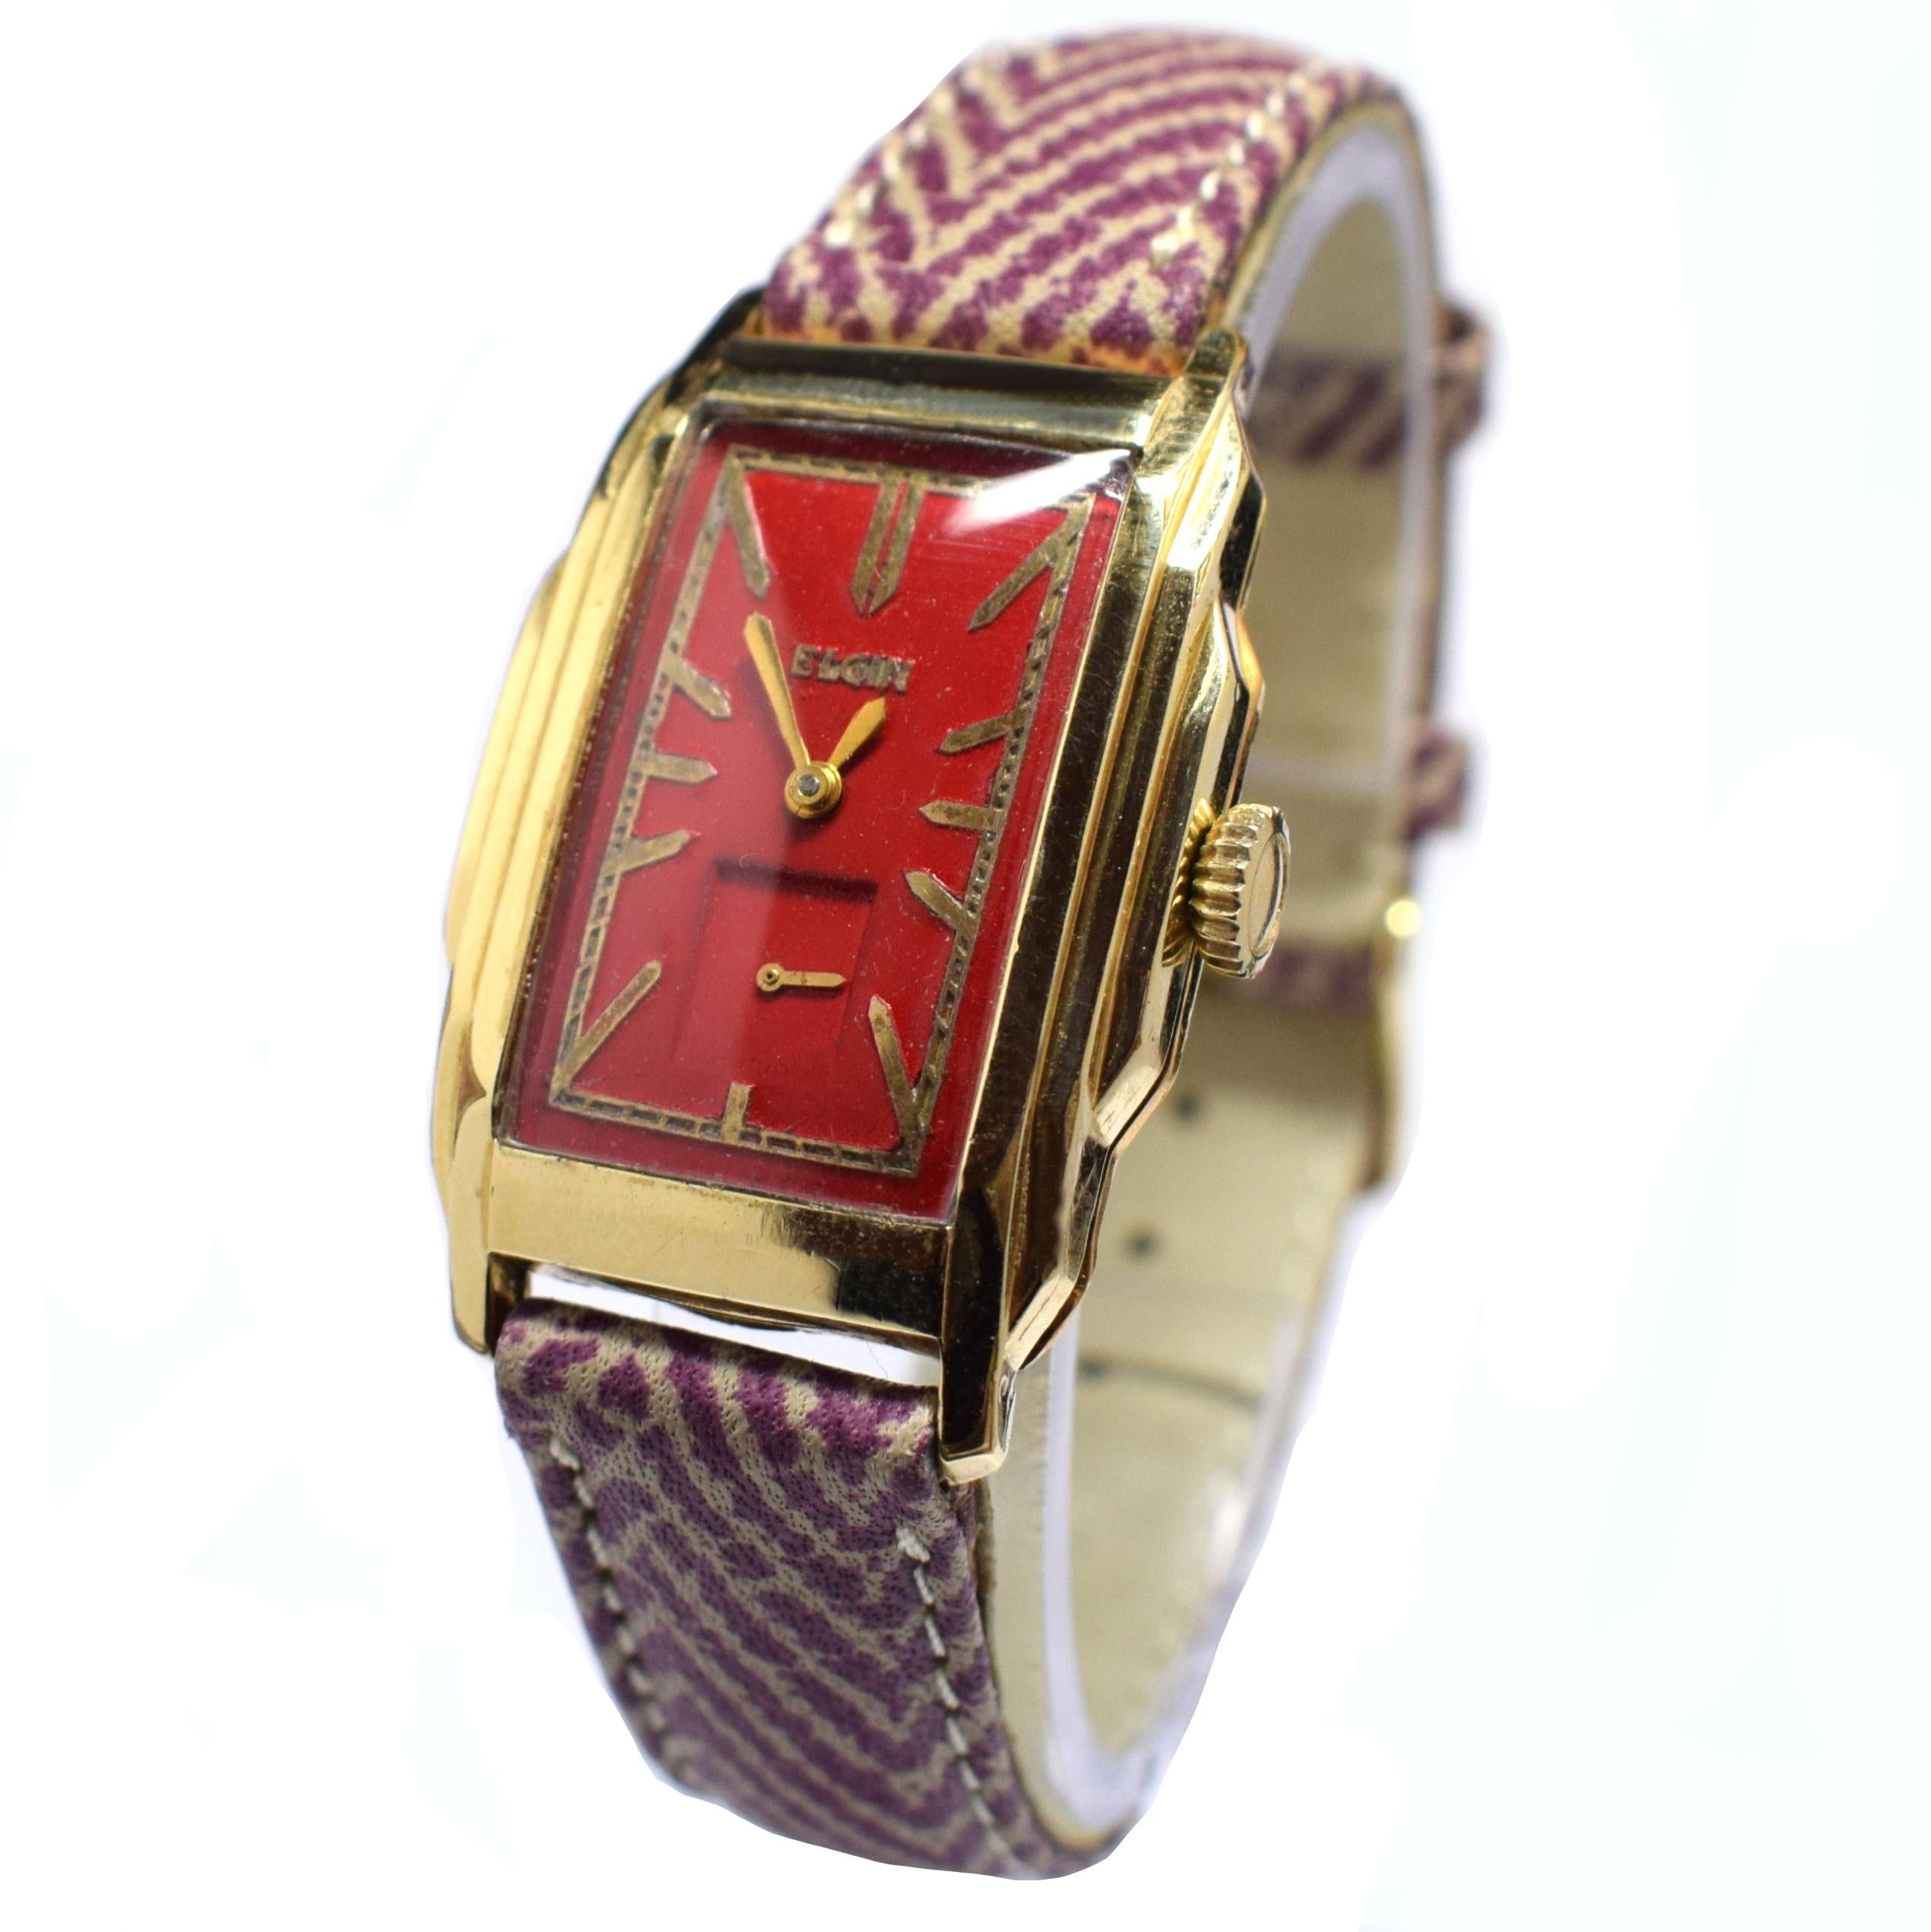 Art Deco 14-Karat Gold Cherry Red Gents Wristwatch by Elgin, Newly Serviced